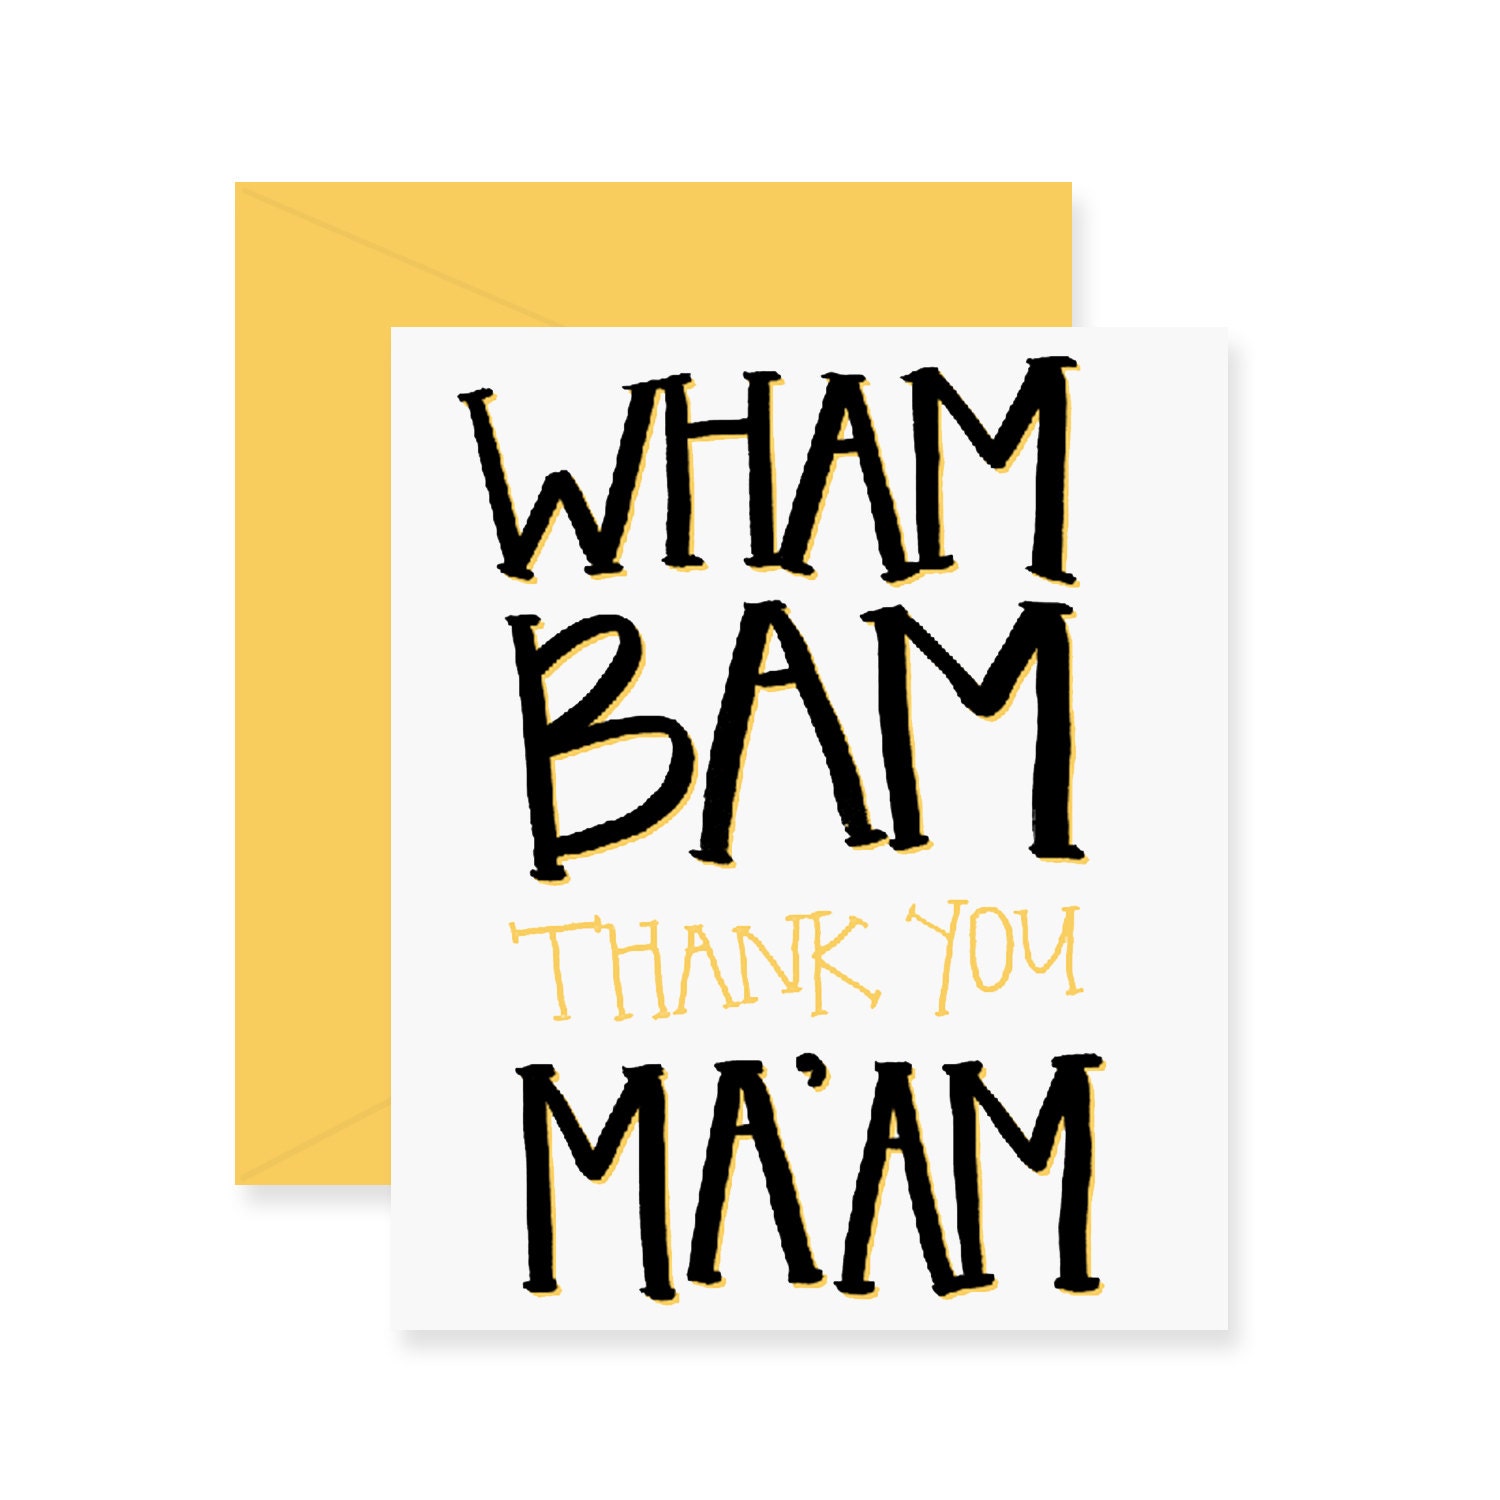 Wham Bam Thank You Maam Greeting Card Thanks Card 8630